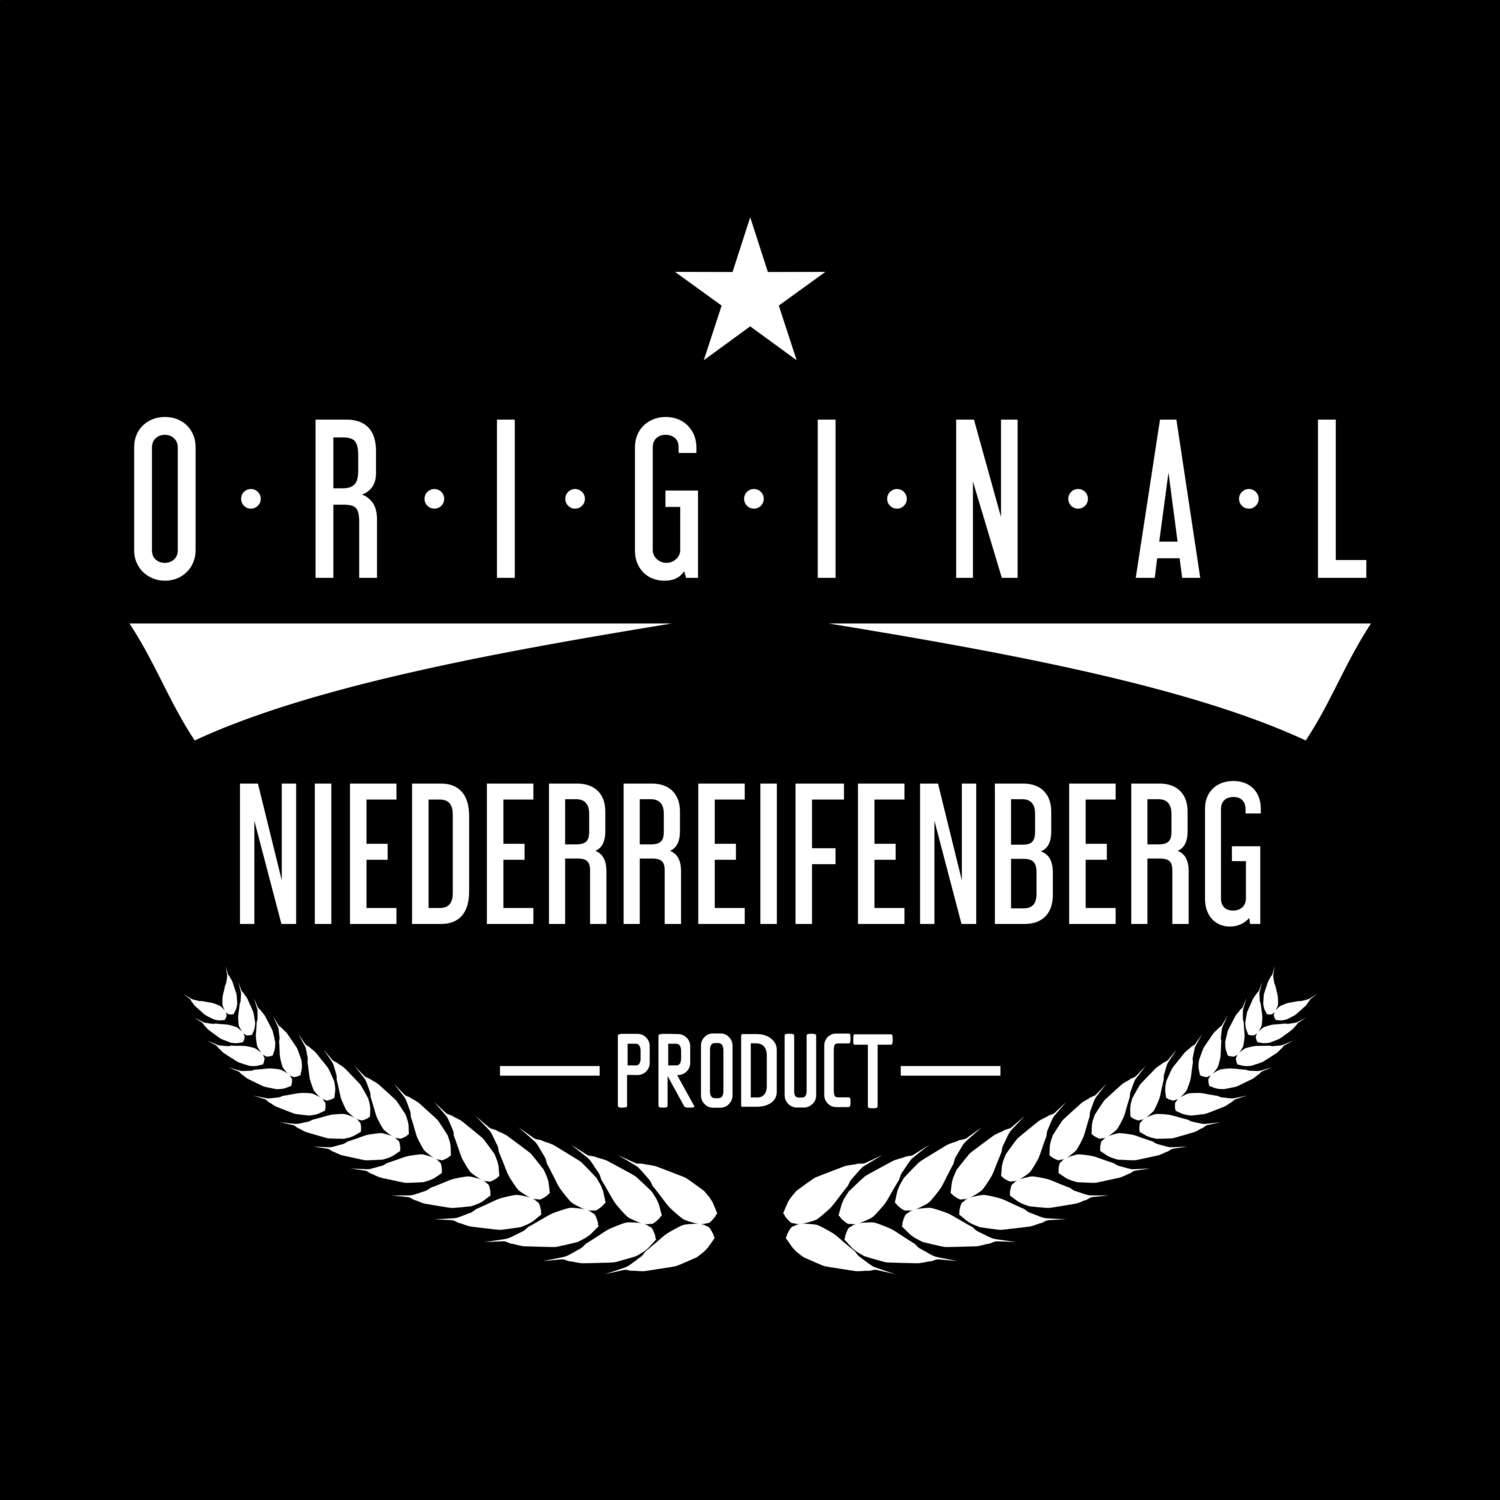 Niederreifenberg T-Shirt »Original Product«